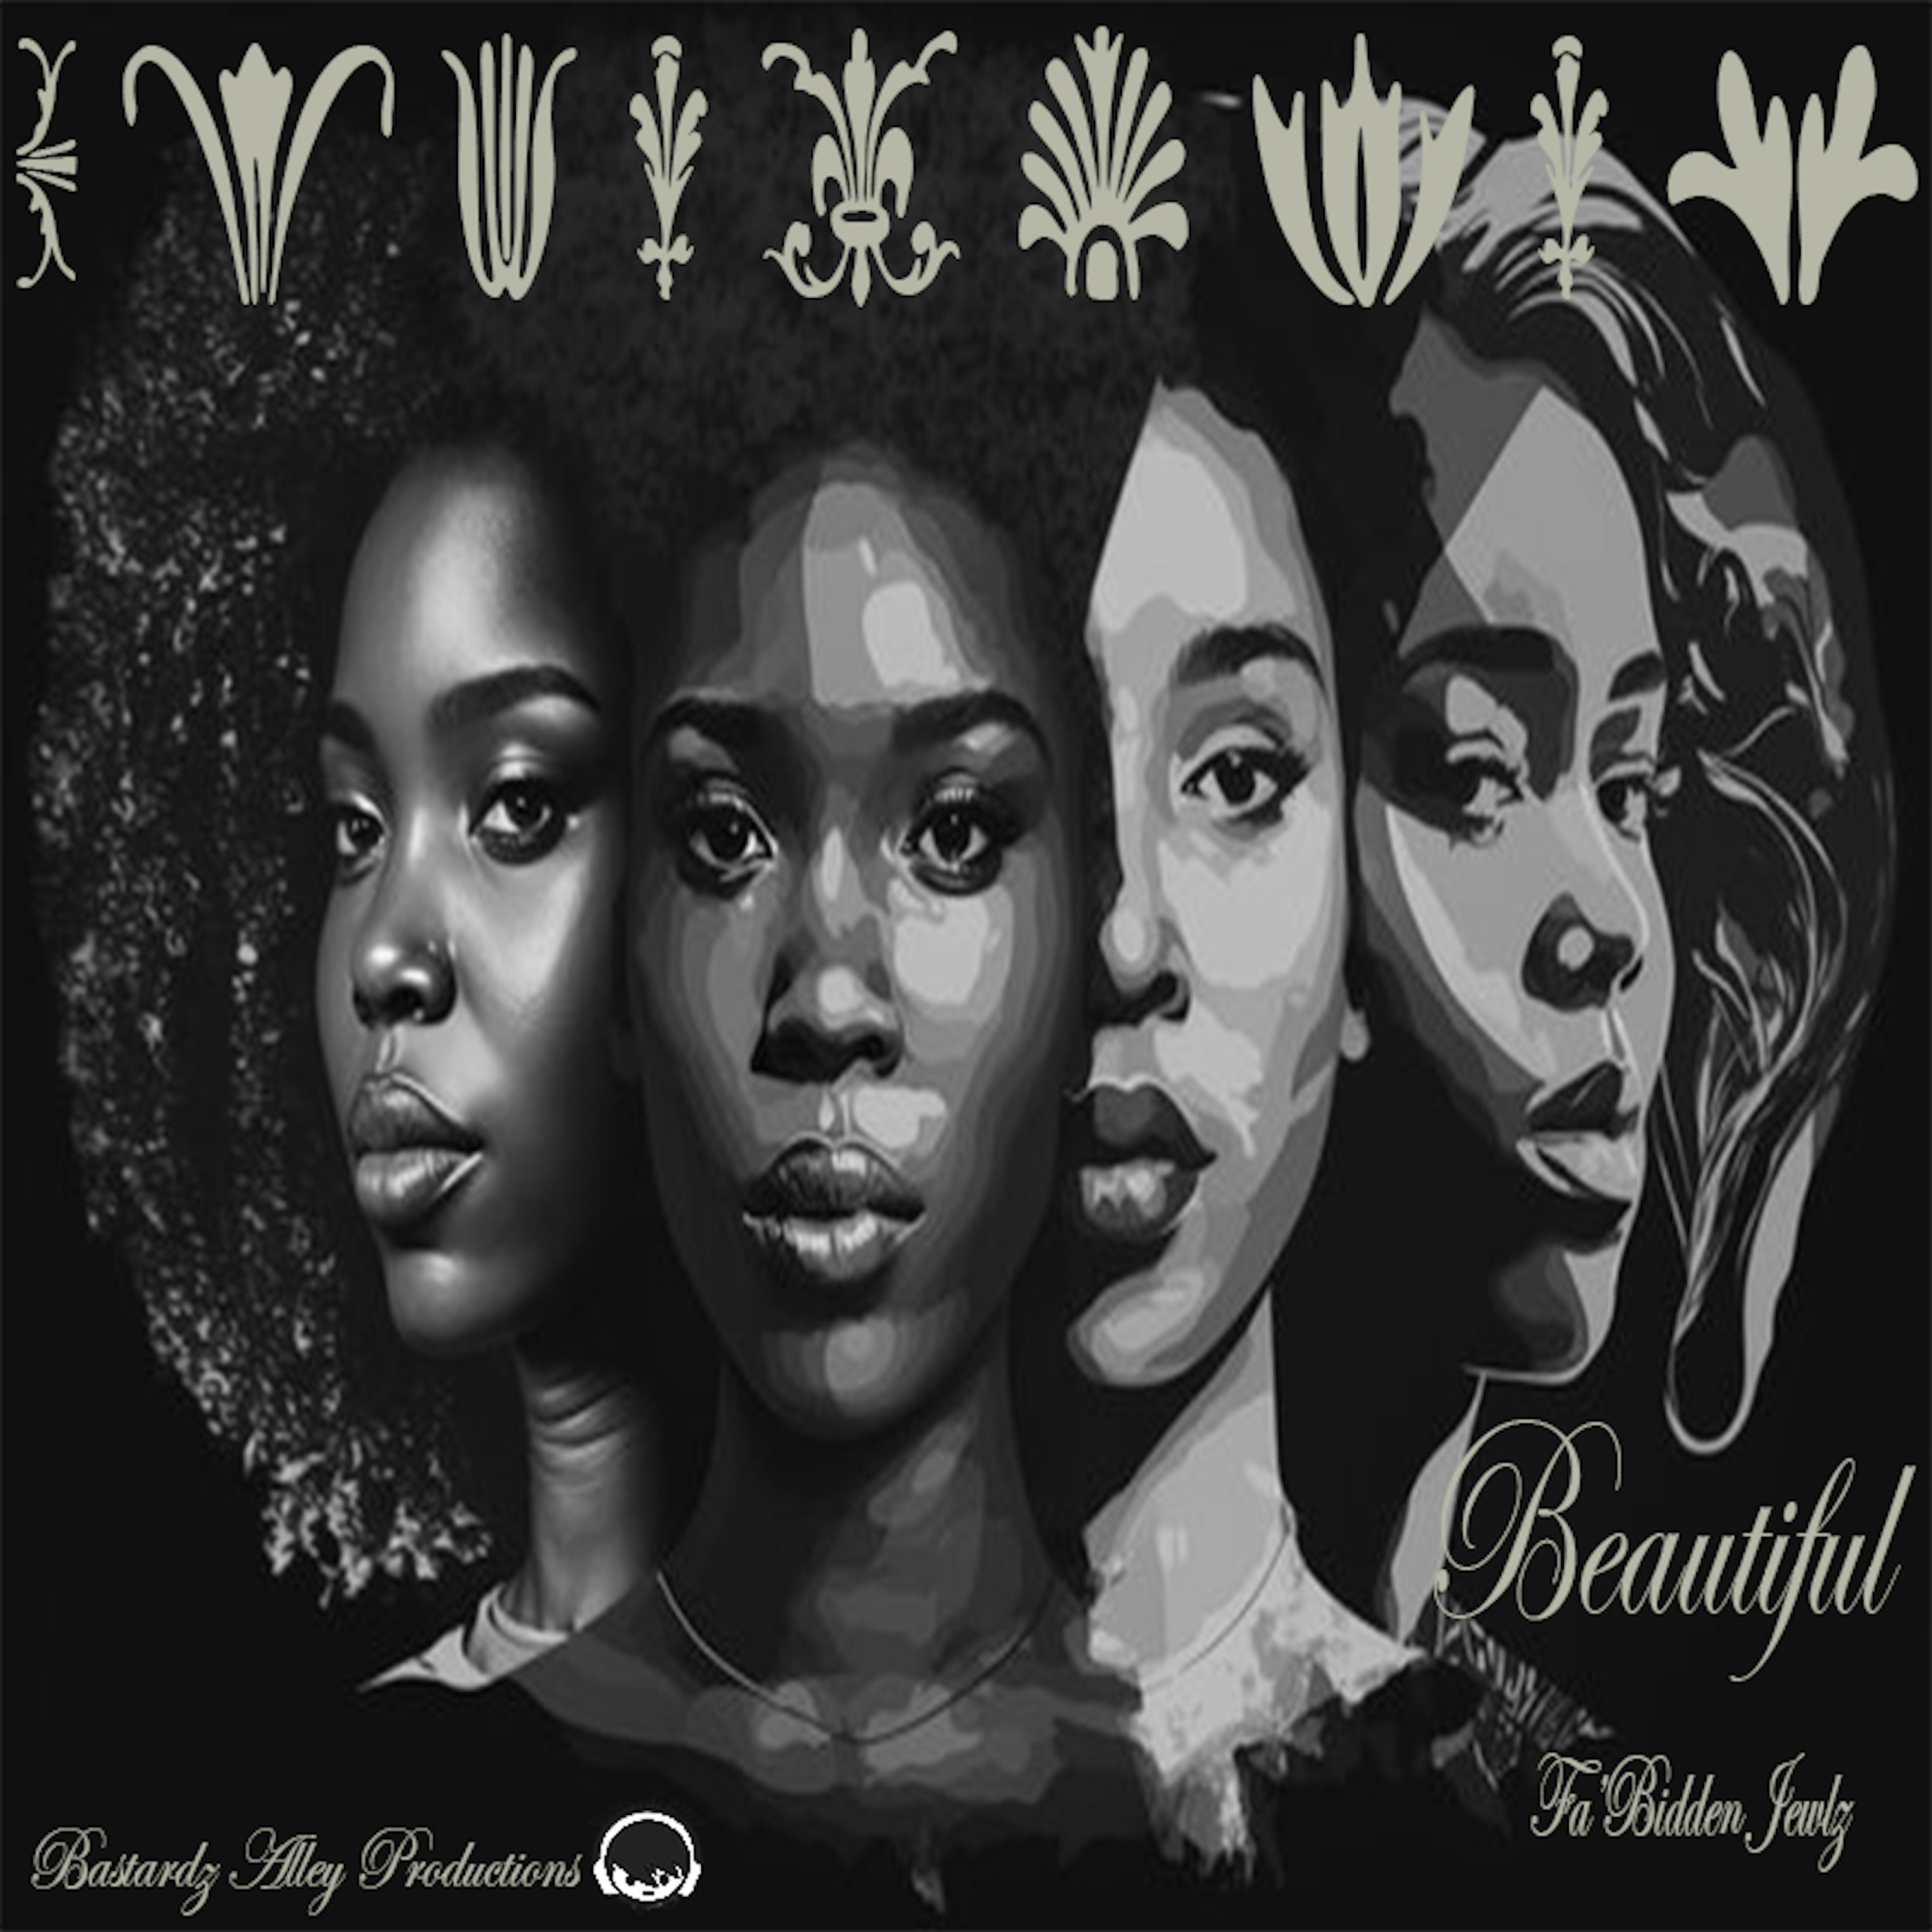 Art for Beautiful by Fa'Bidden Jewlz ft. Marka